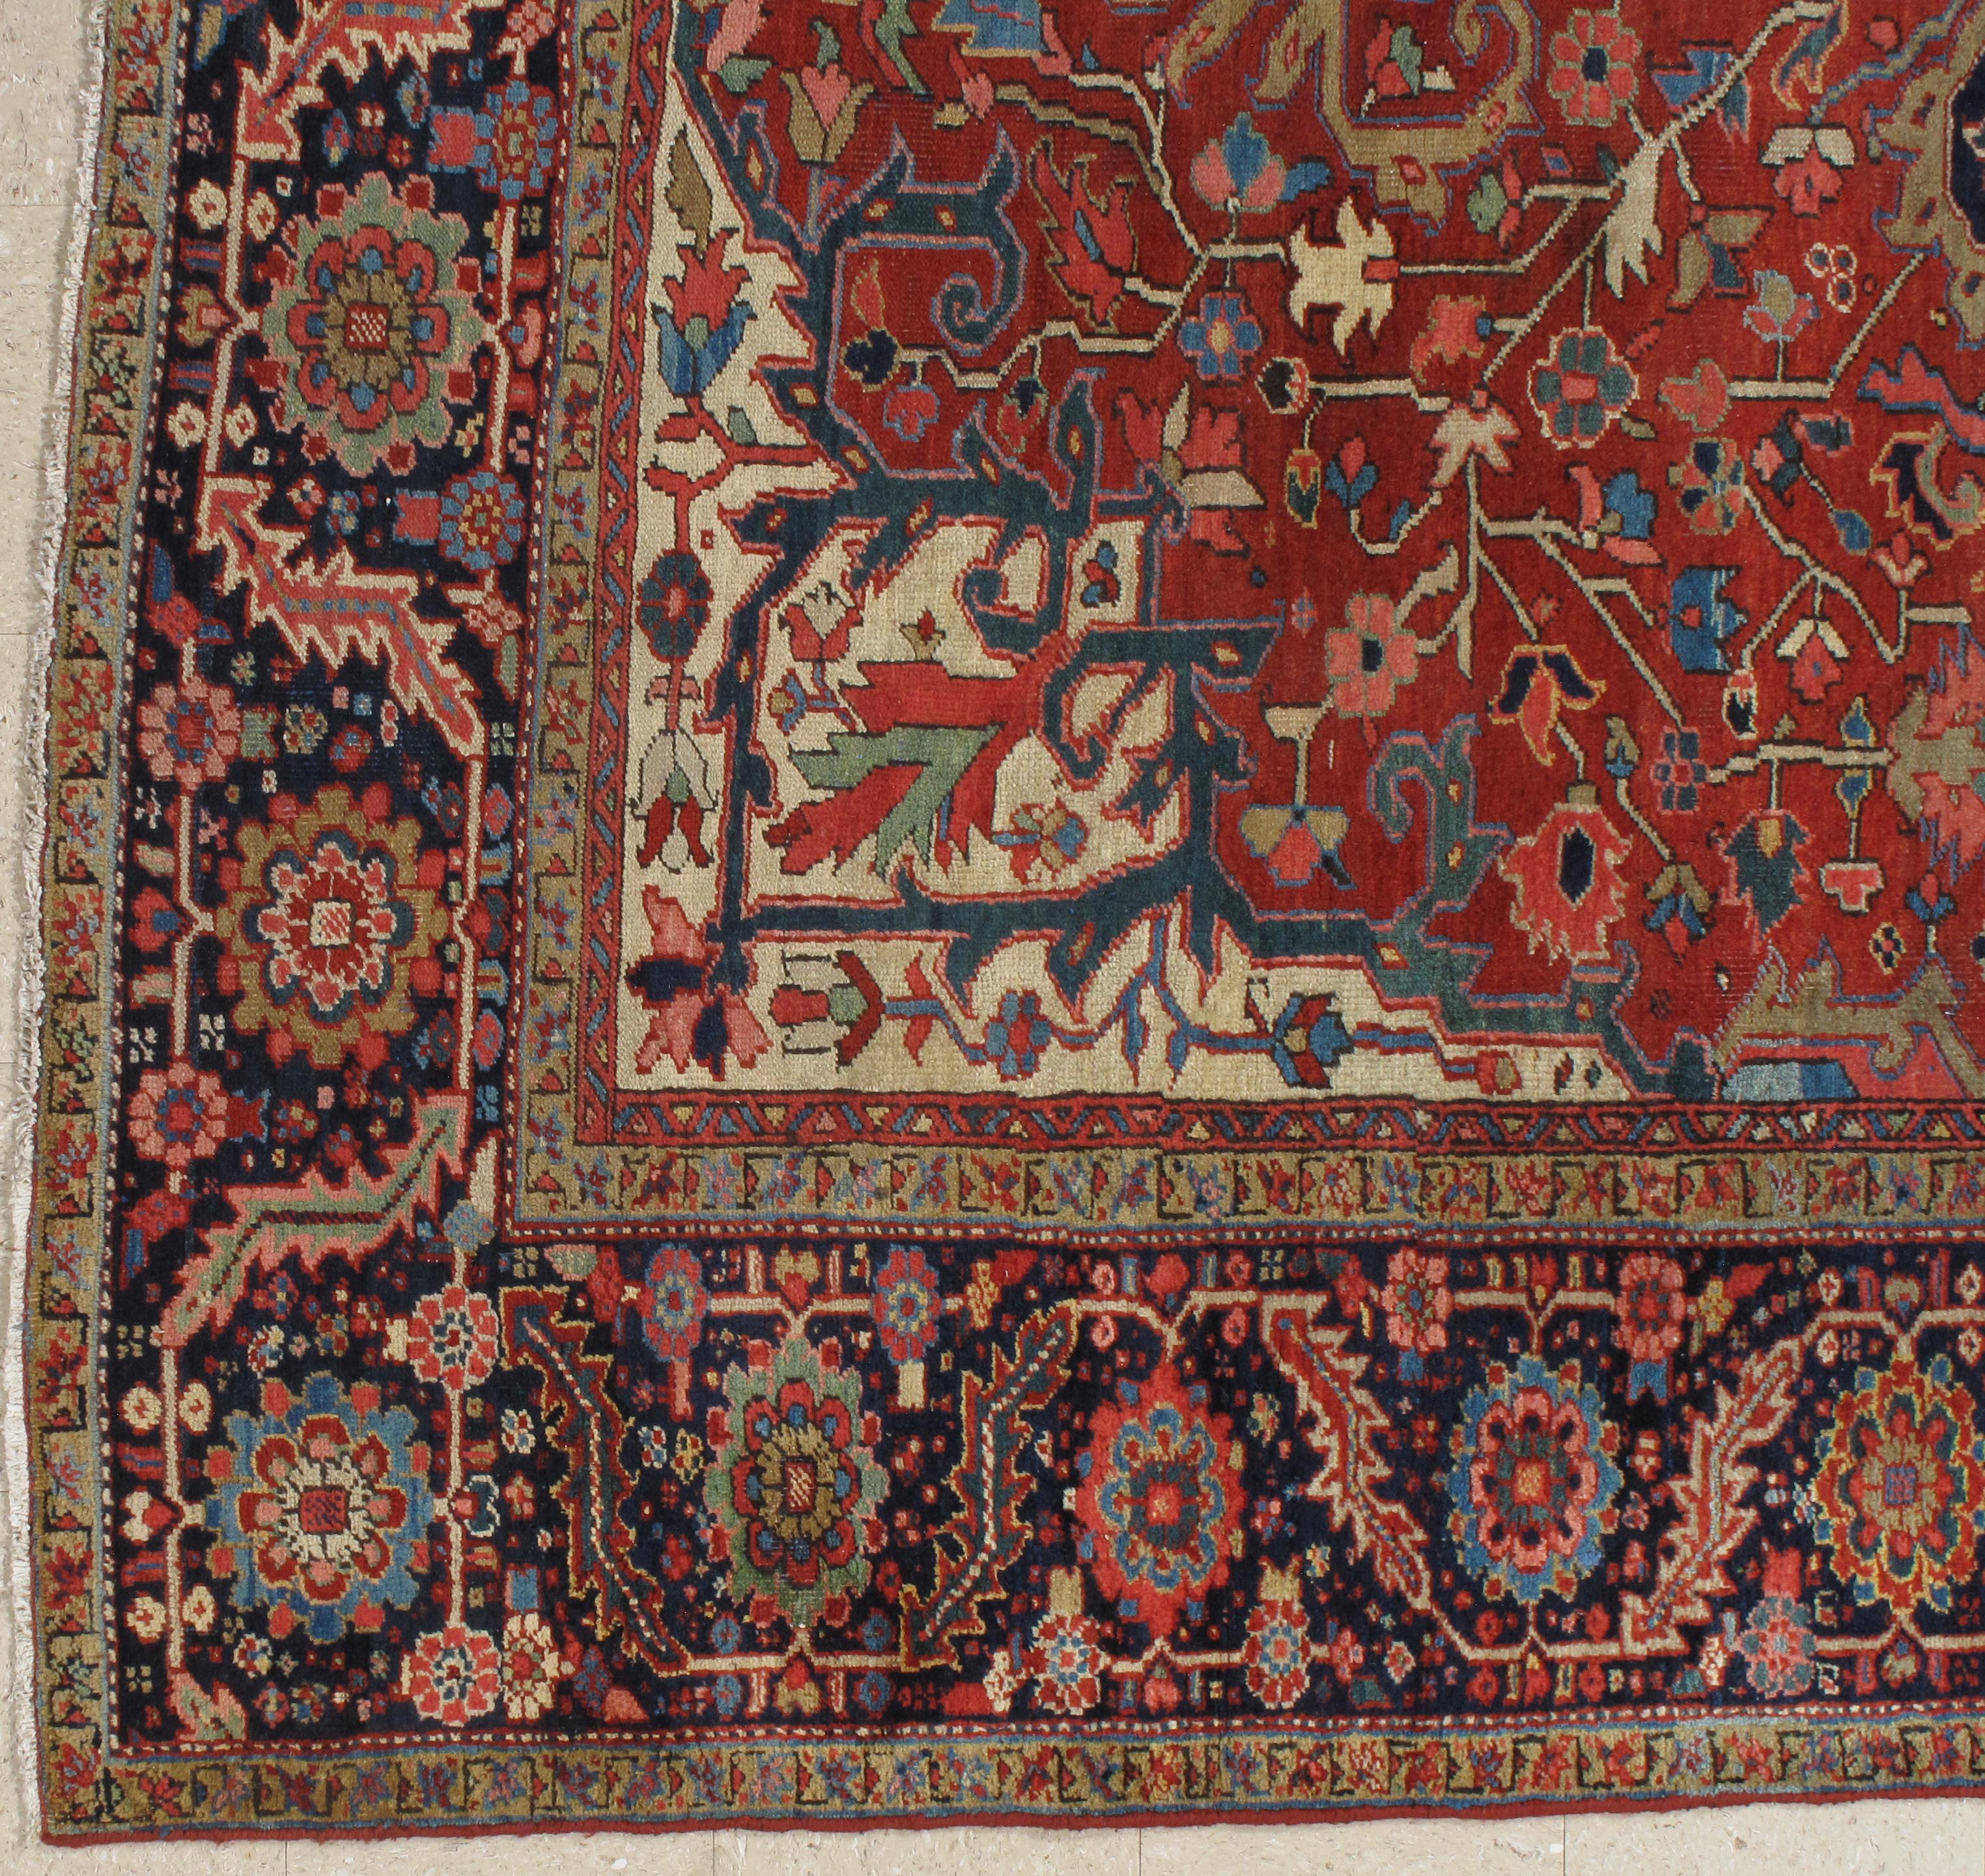 Antique Persian Heriz Carpet, Handmade Wool Oriental Rug, Rust, Navy, Lt Blue 3